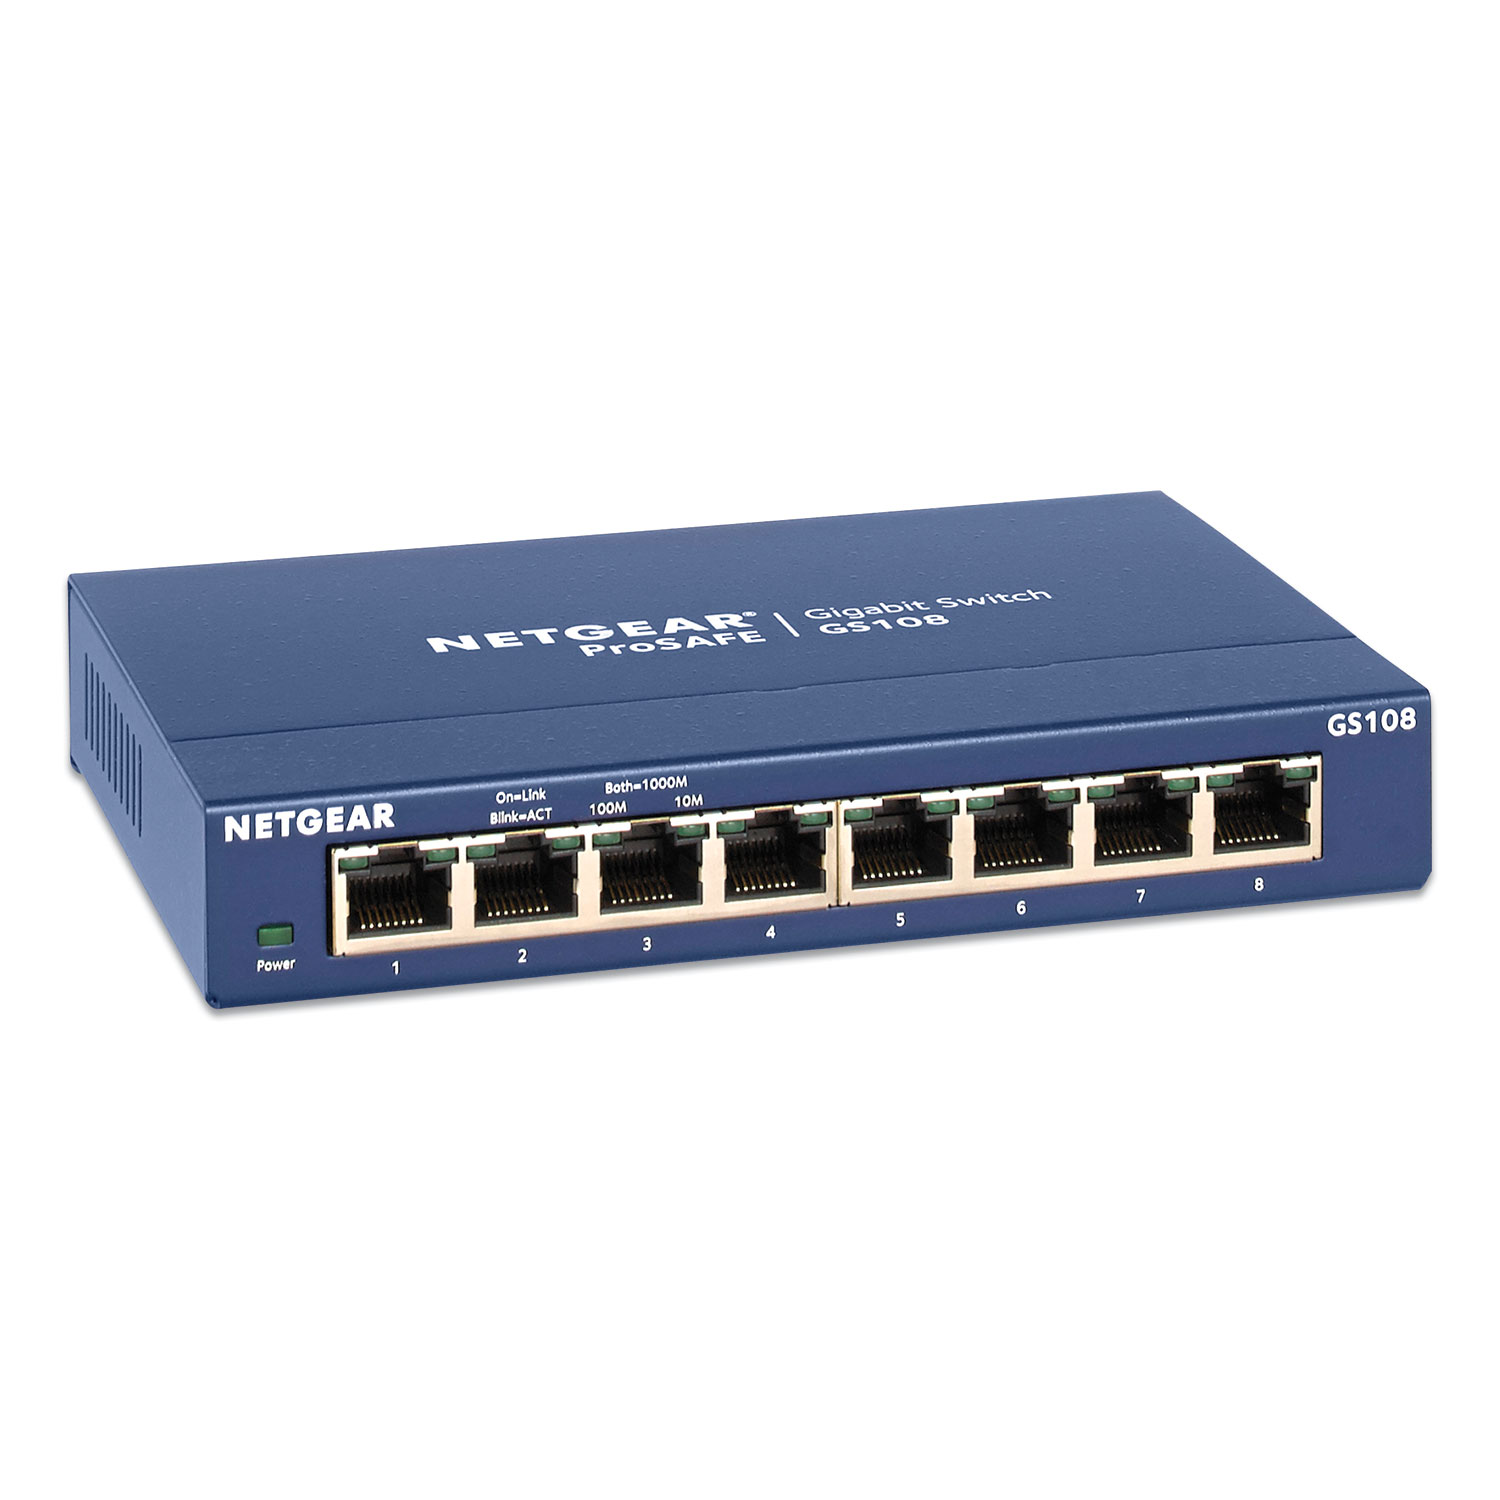 NETGEAR® Unmanaged Gigabit Ethernet Switch, 16 Gbps Bandwidth, 192 KB Buffer, 8 Ports